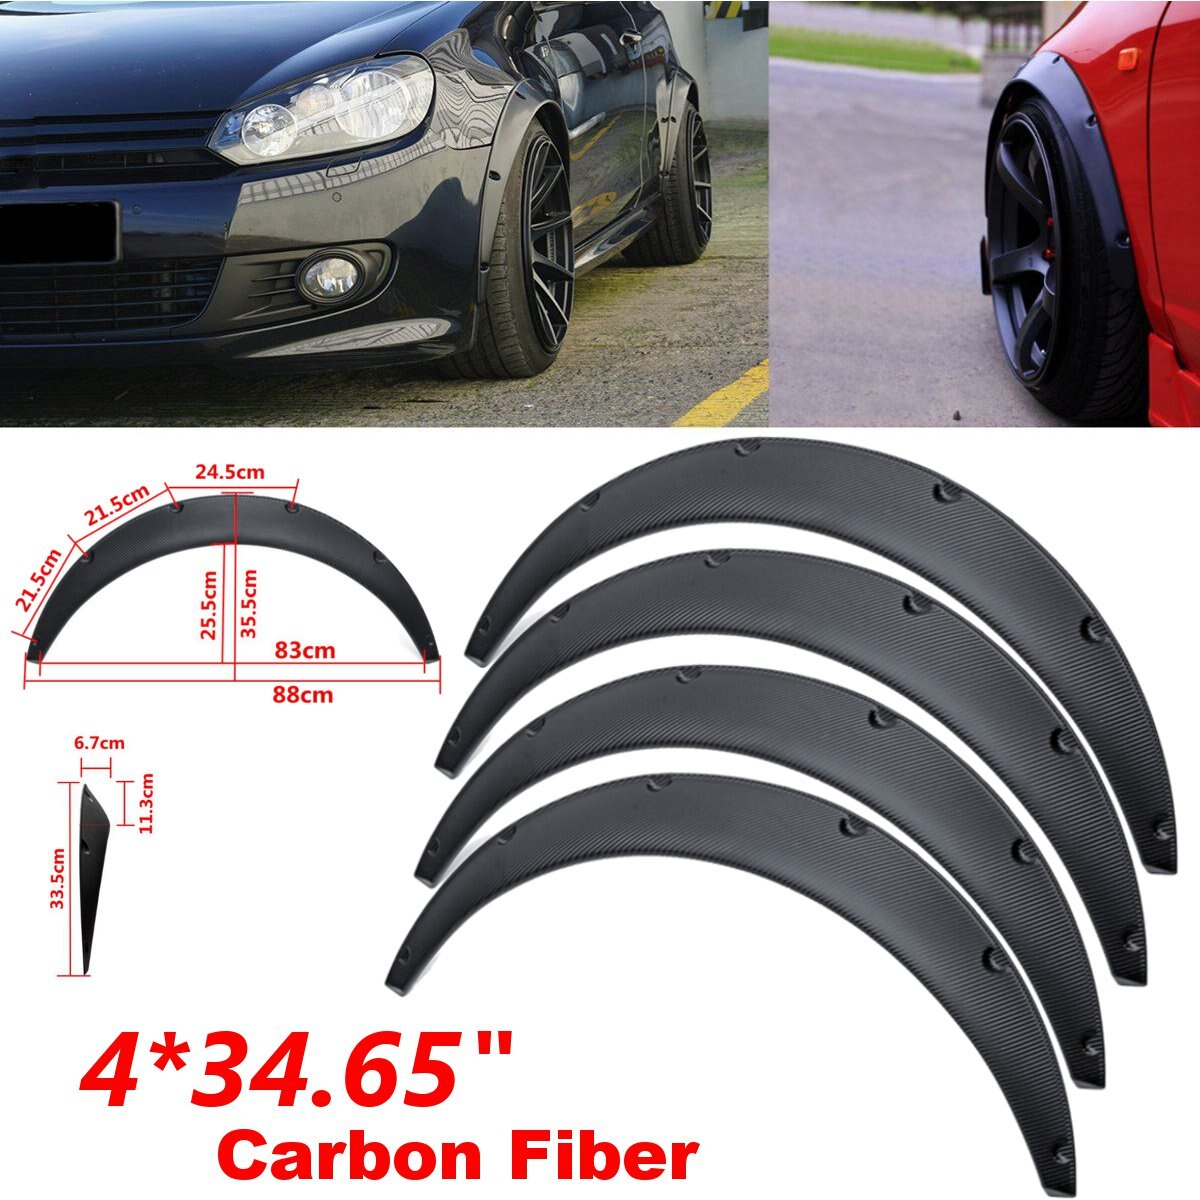 4Pcs Universal Flexible Car Body FOR Fender Flares Extension Wide Wheel Arches 88cm/34.65" Car Mudguards for SUVs Car: Carbon Fiber